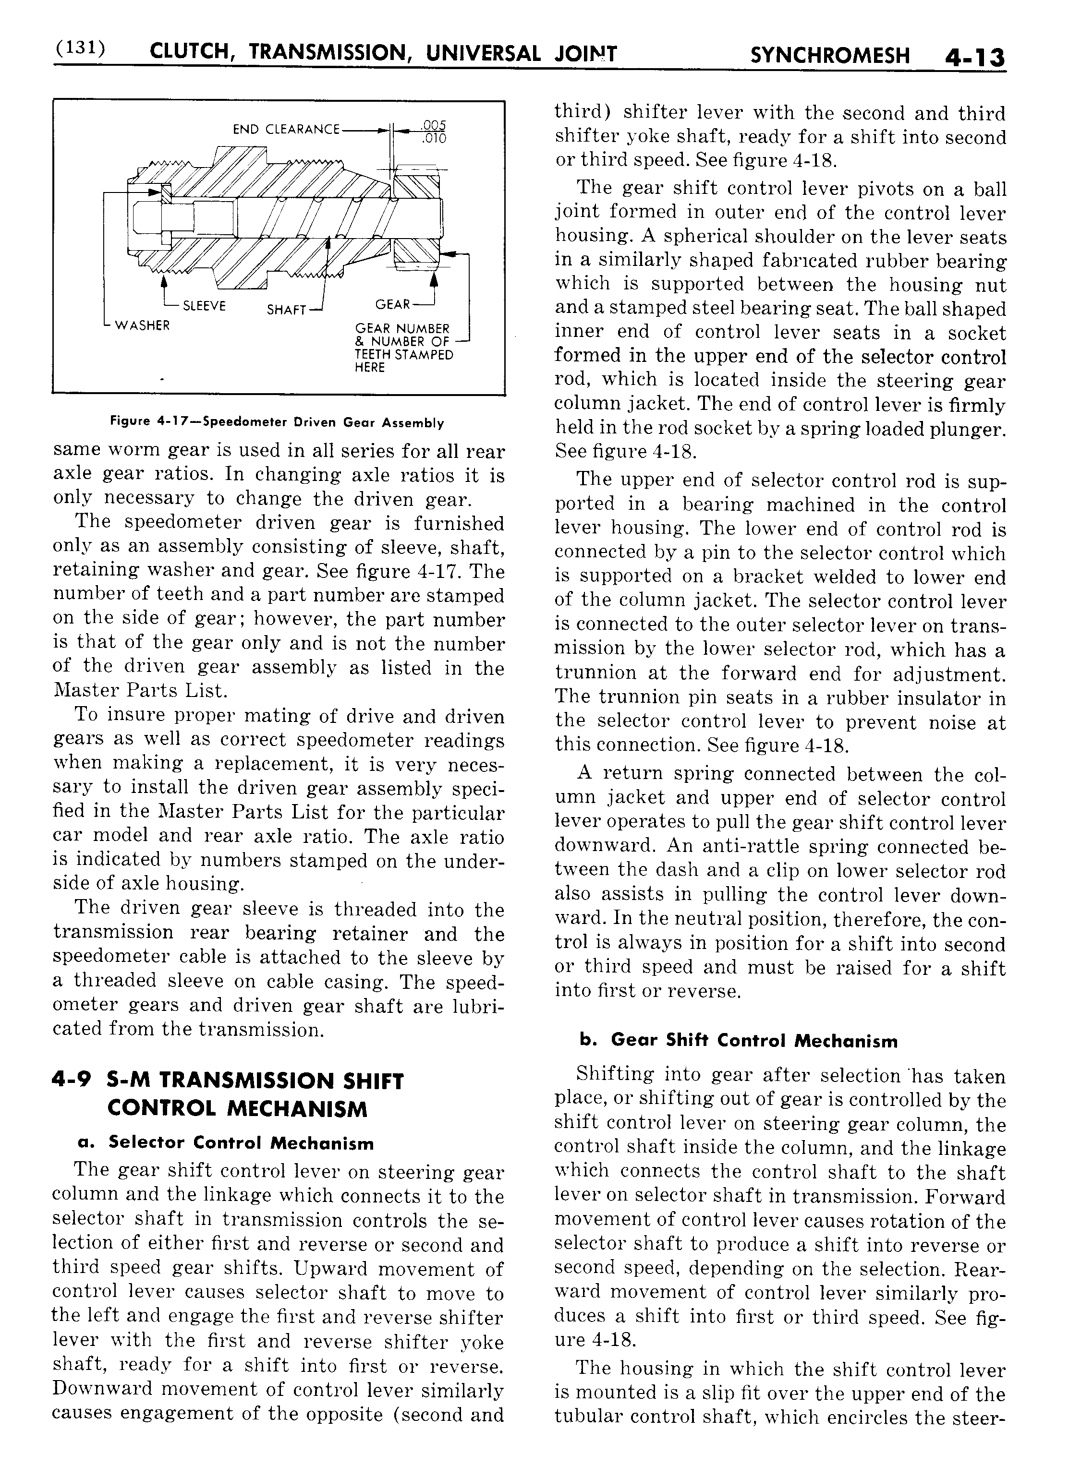 n_05 1951 Buick Shop Manual - Transmission-013-013.jpg